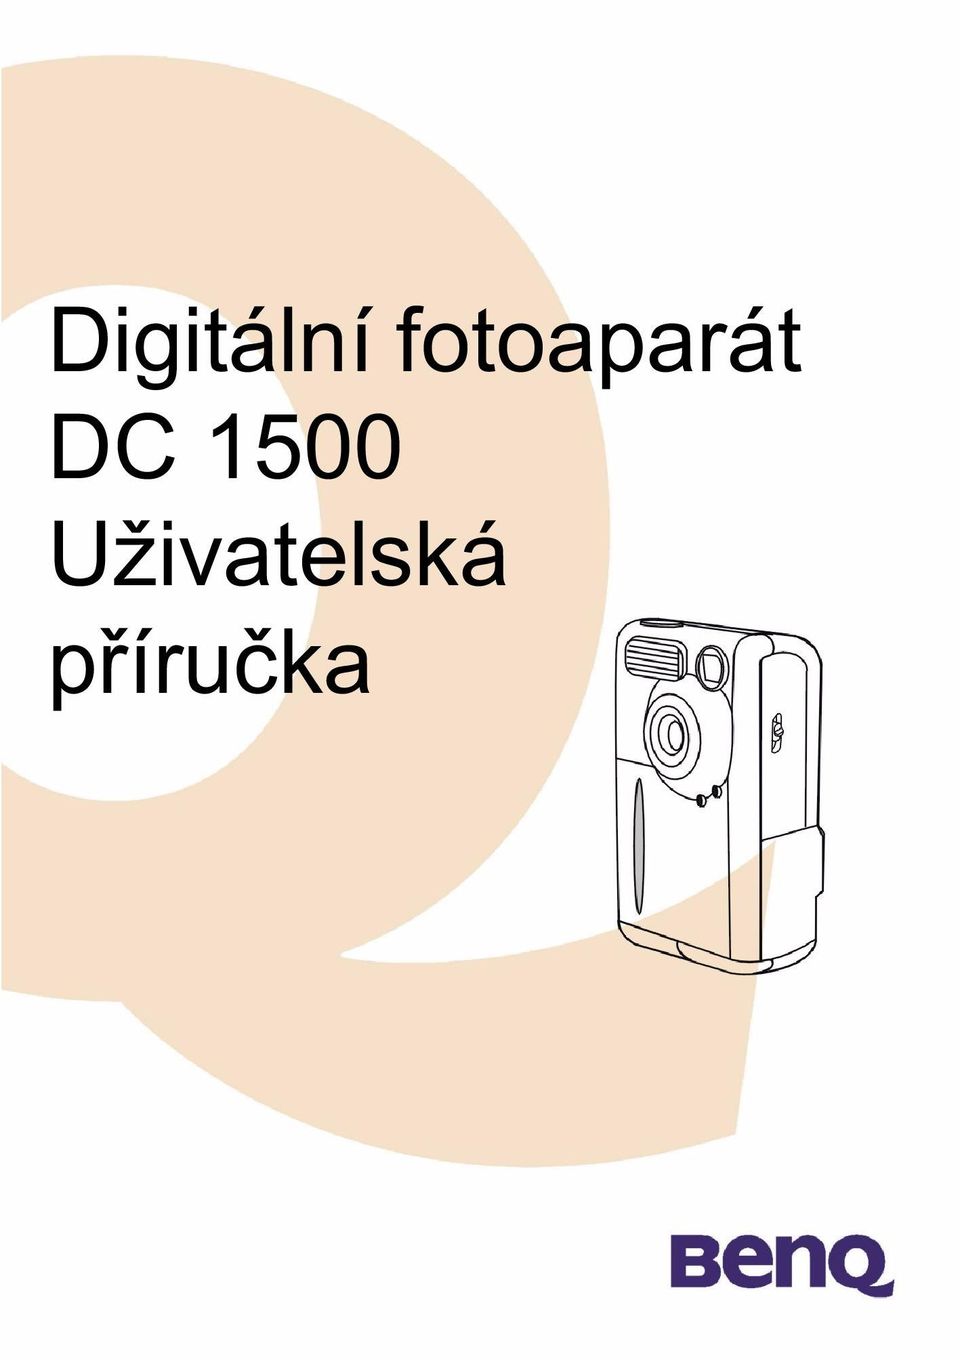 DC 1500